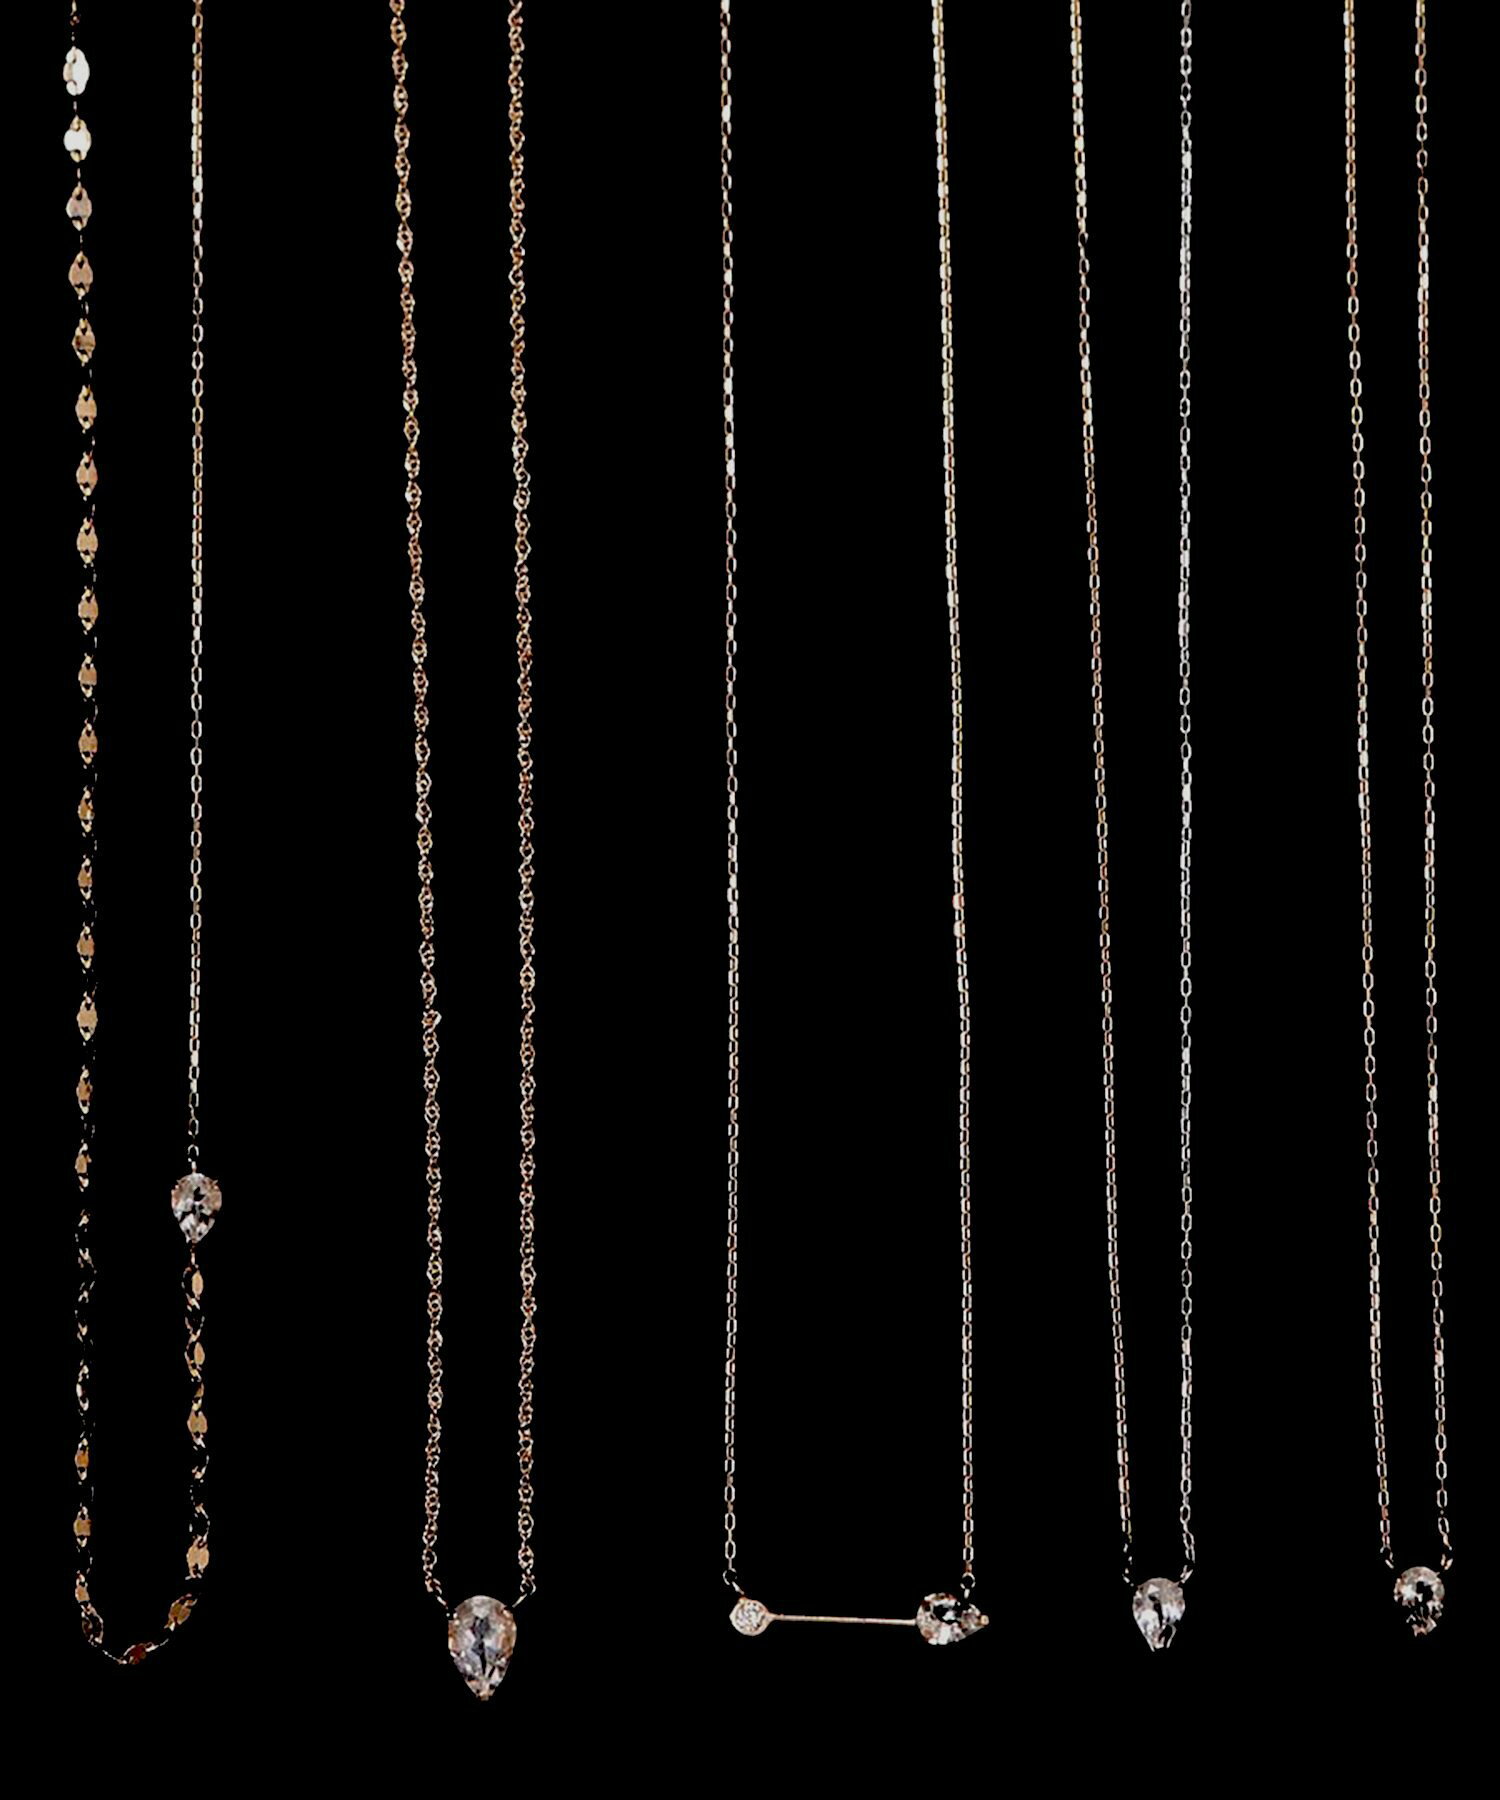 les bon bon/float side necklace フロート サイド ネックレス イエローゴールド K10 10K ジュエリー ギフト MADE IN JAPAN 日本製 ルボンボン BOB162